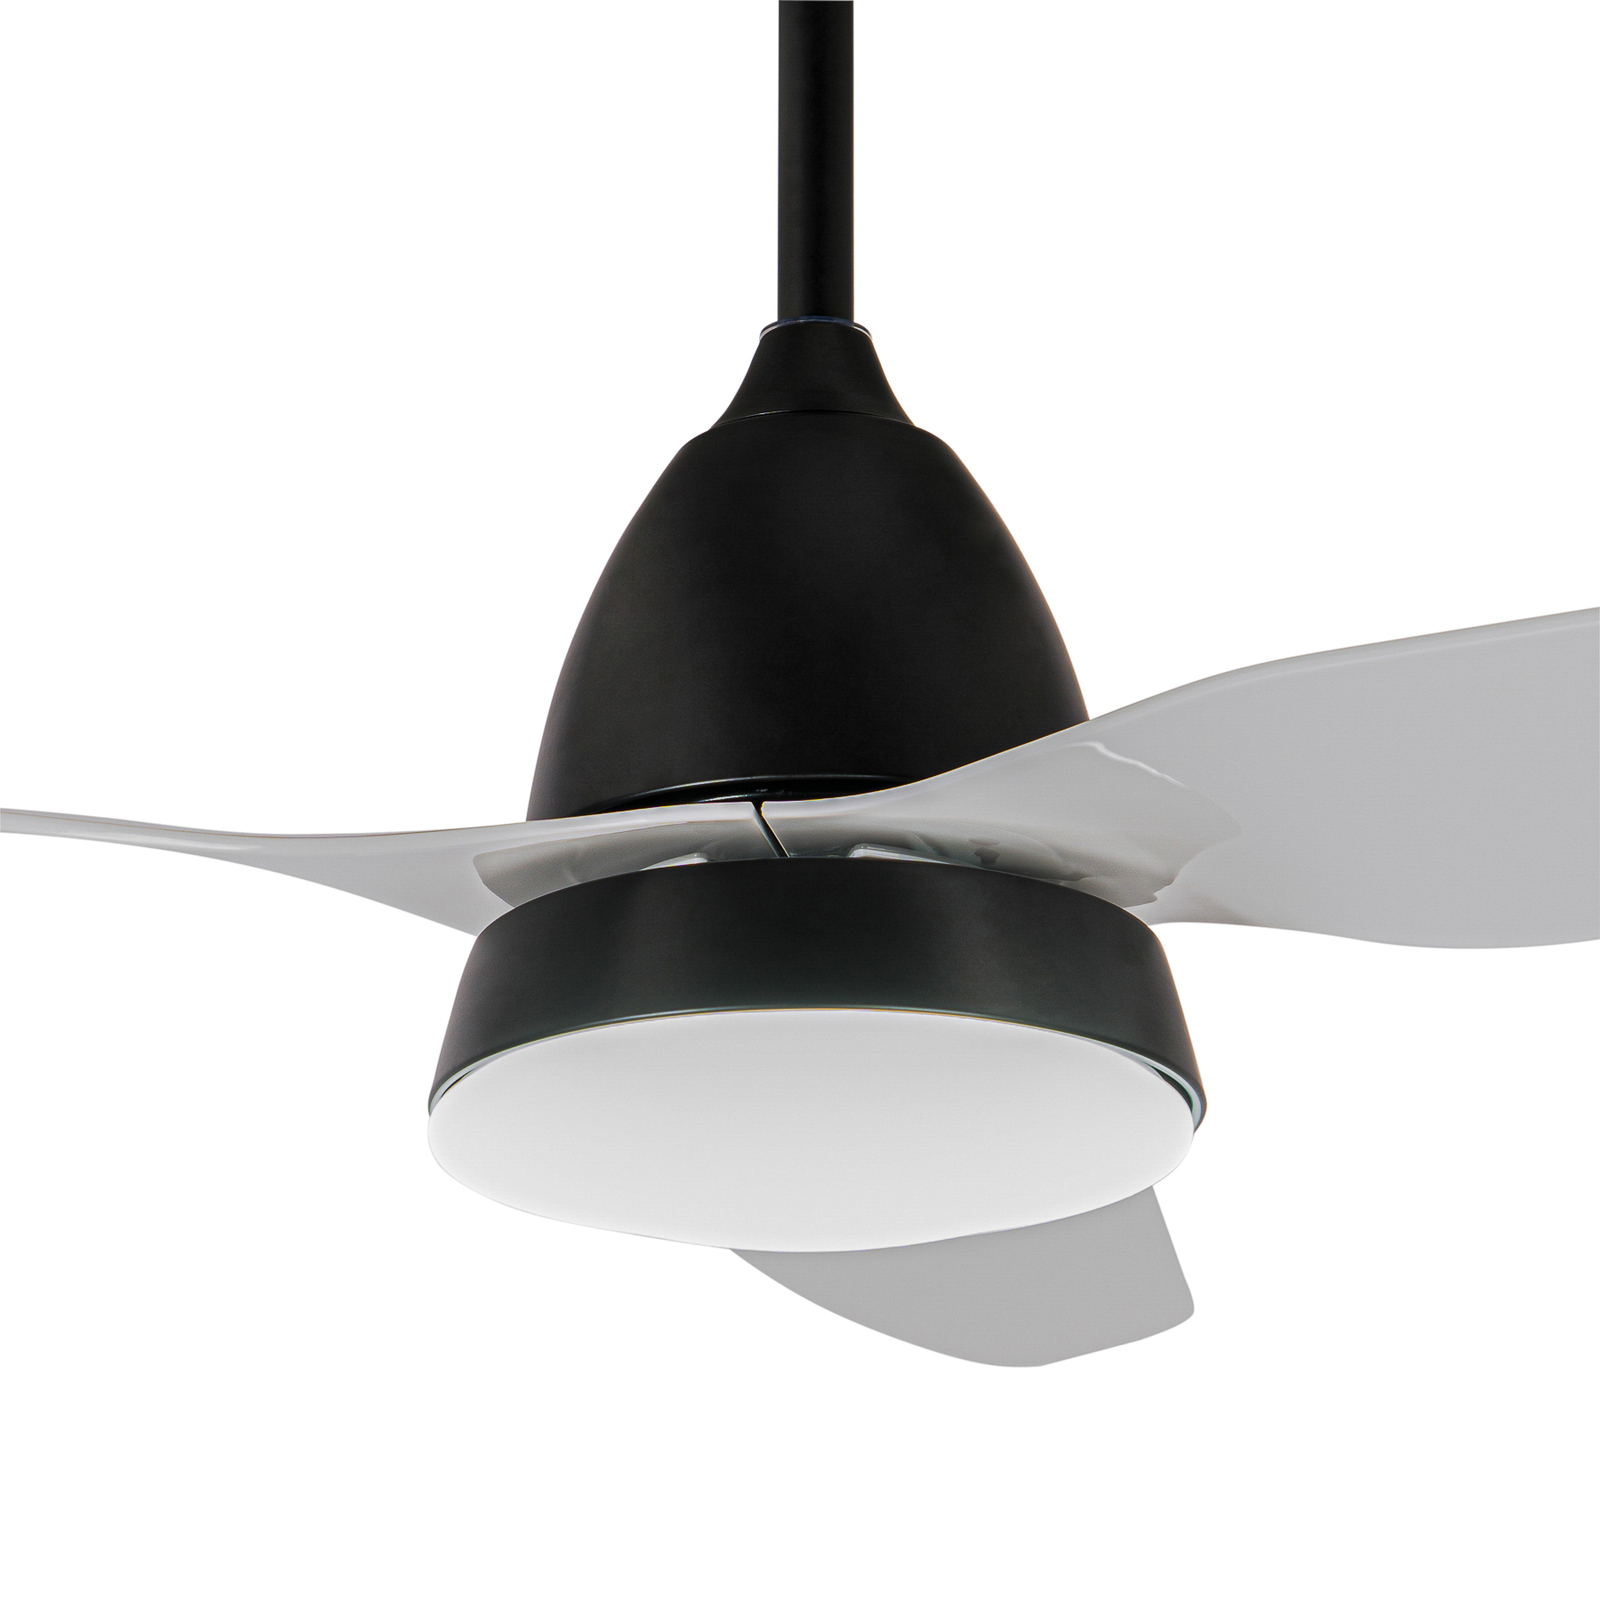 Starluna Coriano LED ceiling fan, black